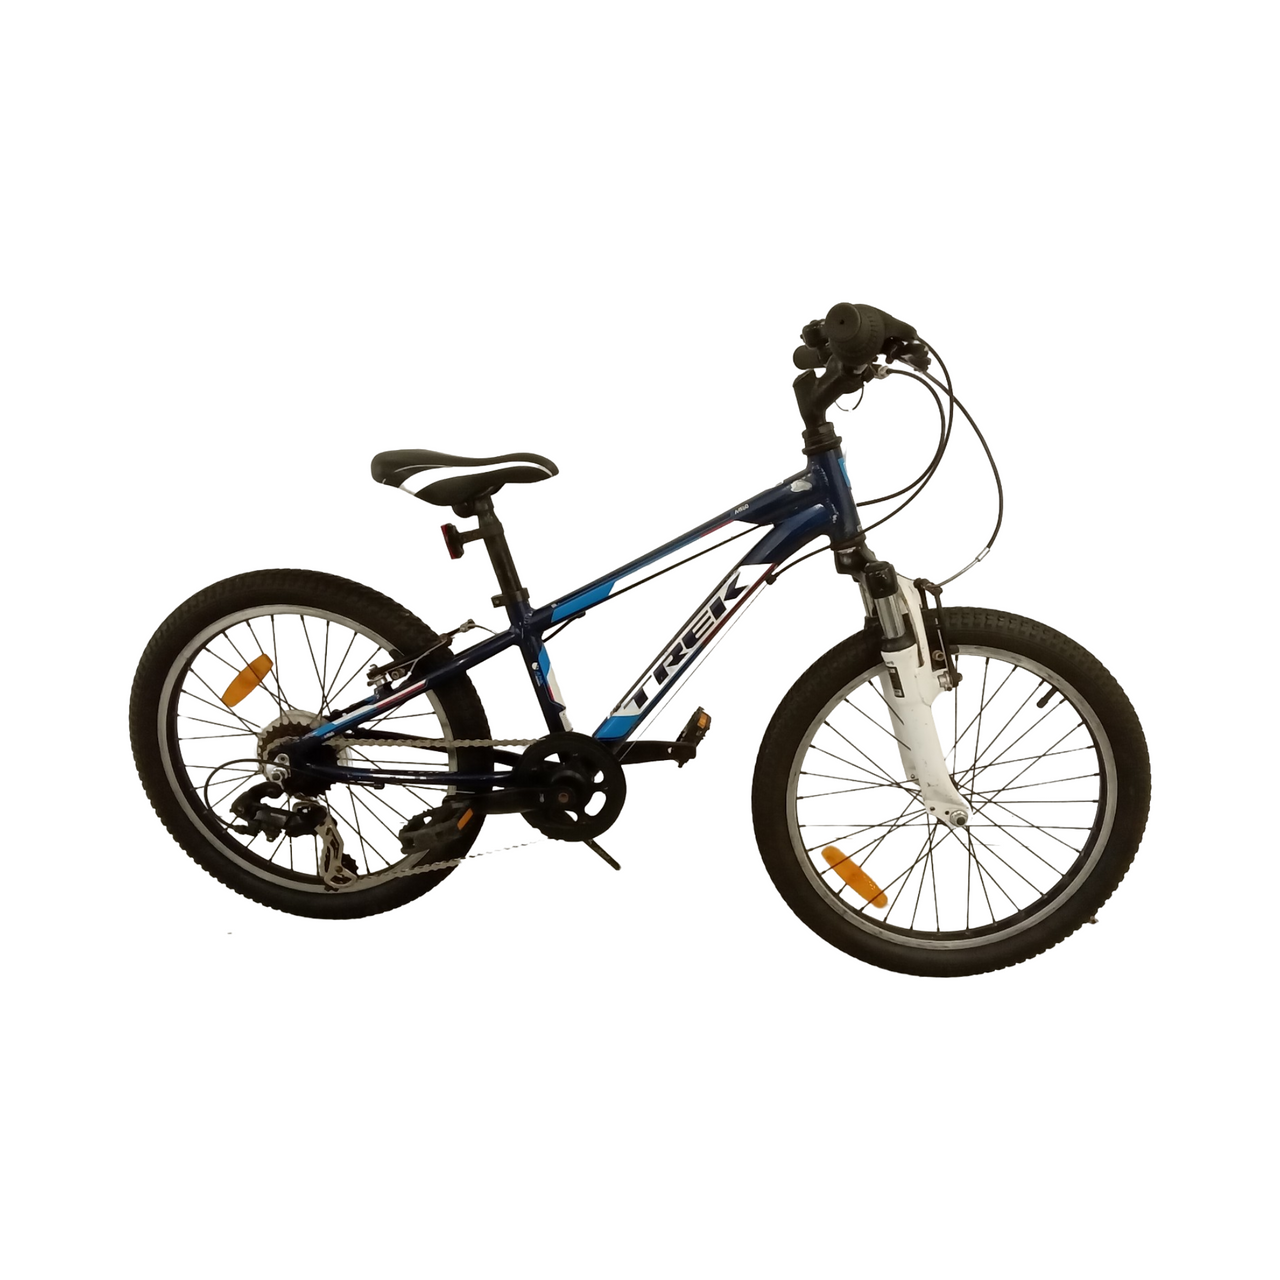 1537 - 20" Blue, Mountain Bike,
Kids, Bike